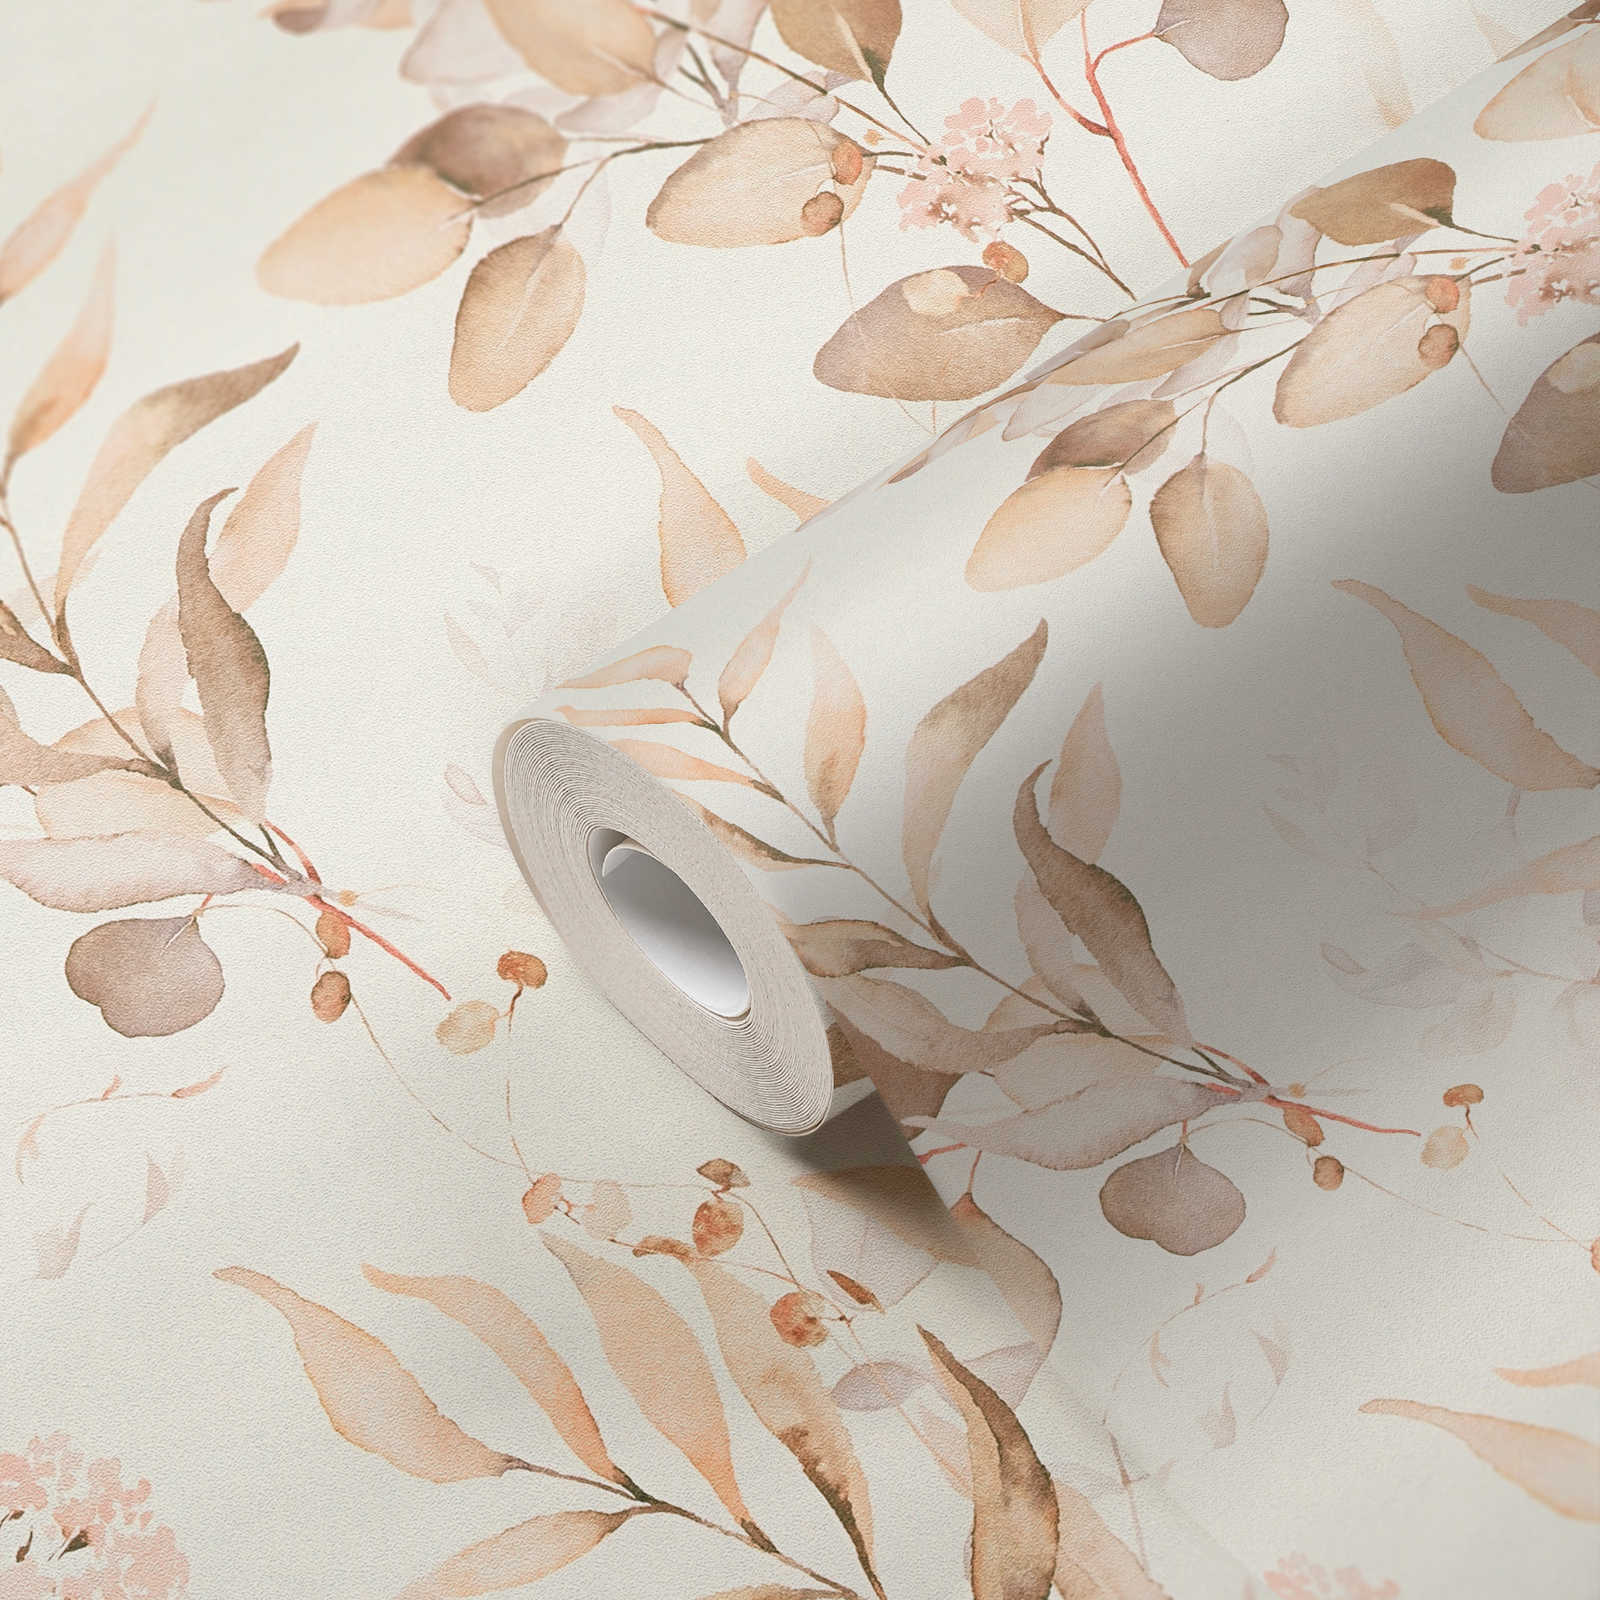             Non-woven wallpaper with watercolour leaf motif in warm tones - cream, beige
        